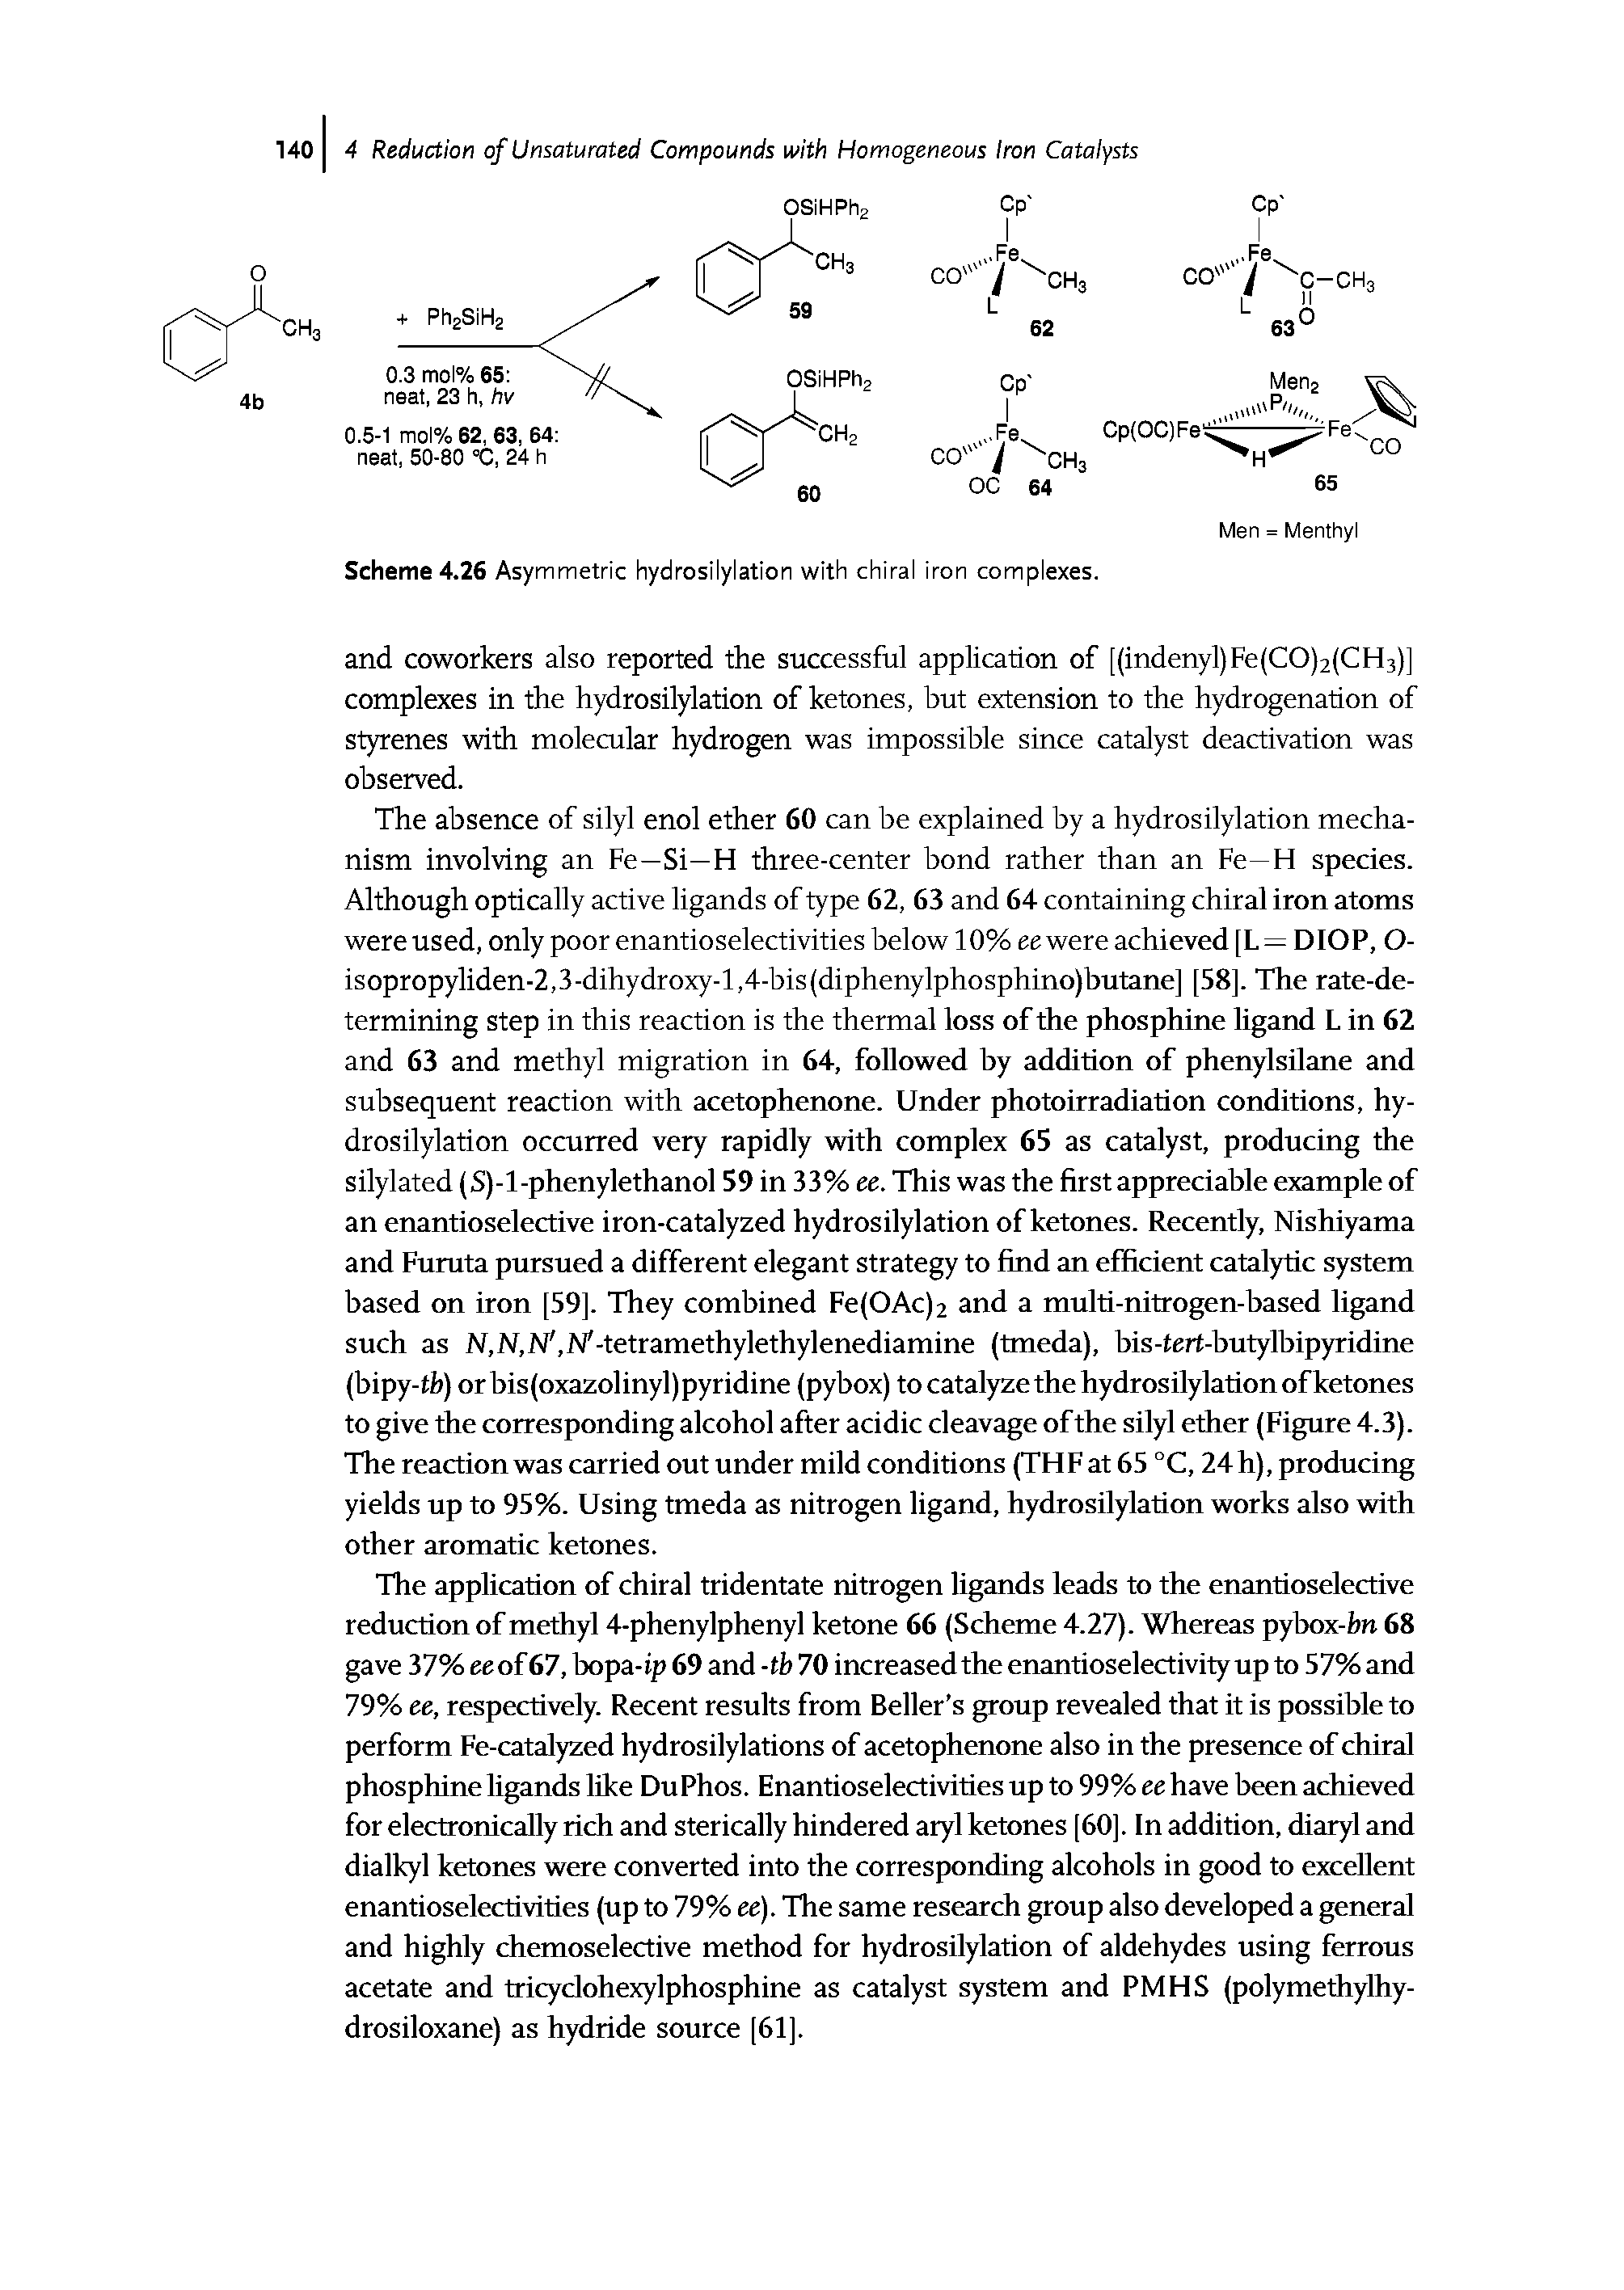 Scheme 4.26 Asymmetric hydrosilylation with chiral iron complexes.